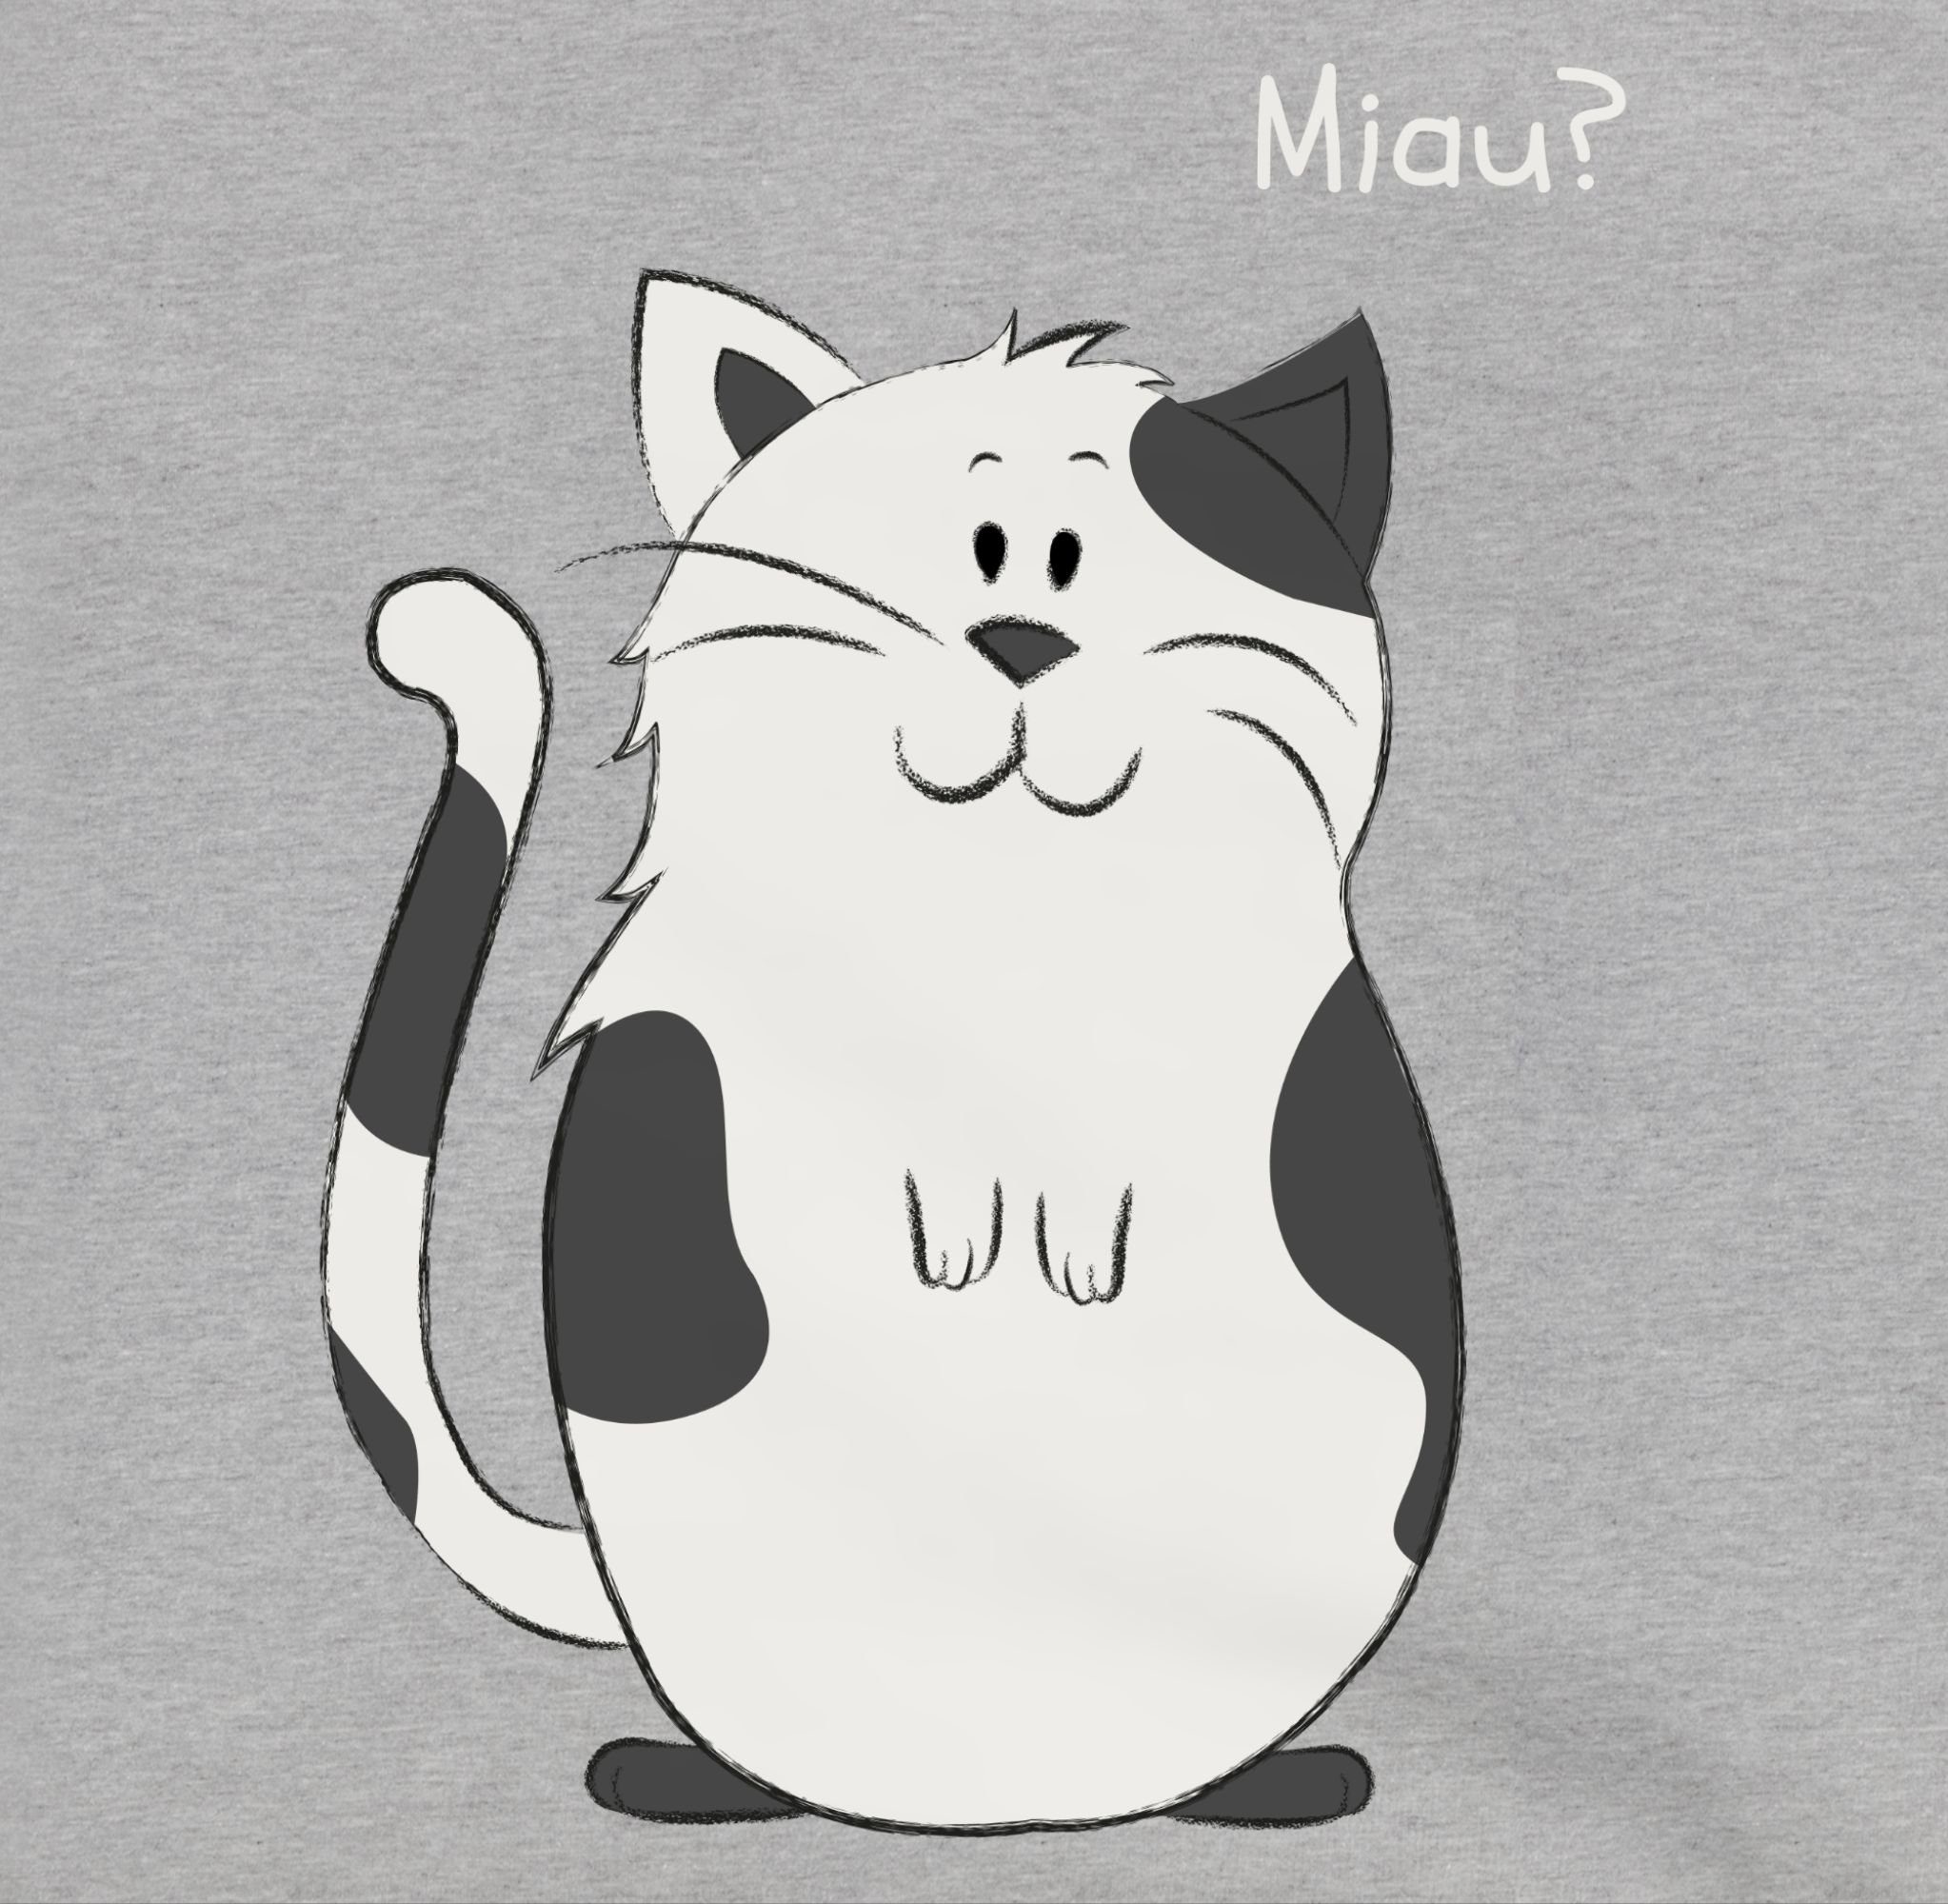 Print lustige Katze Shirtracer Grau Sweatshirt Animal 2 Tiermotiv meliert